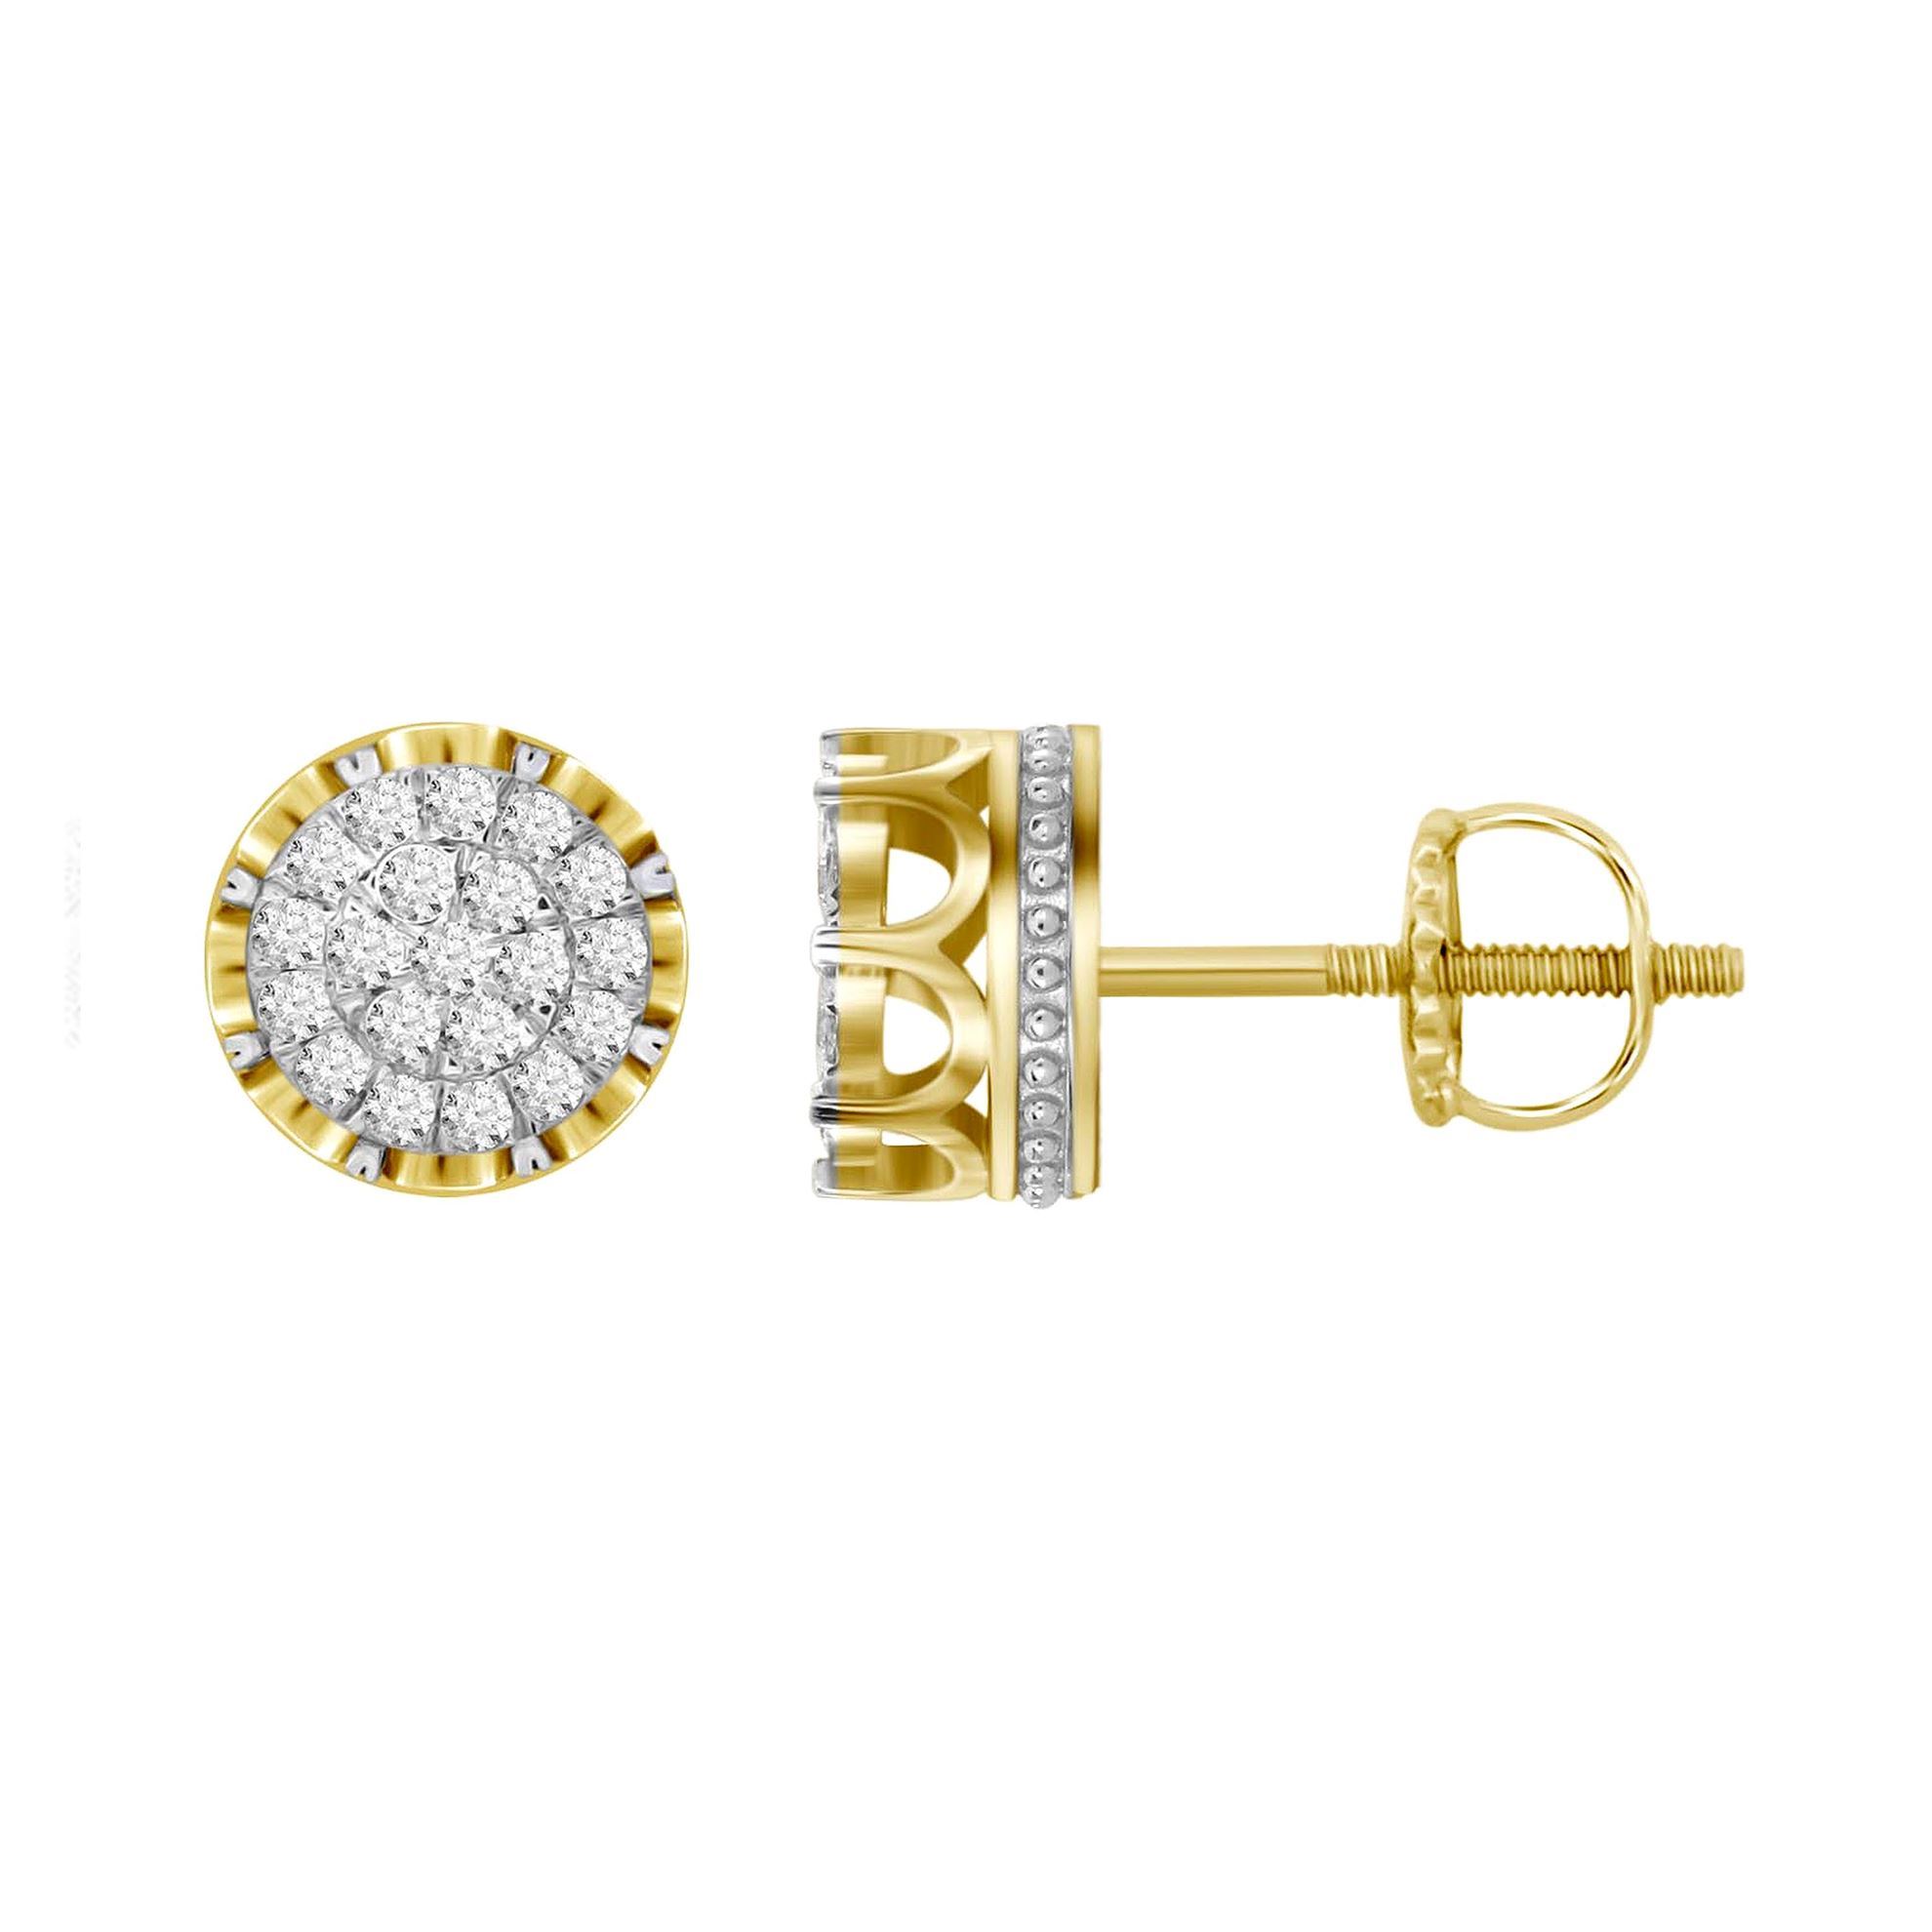 0005226_mens-earrings-34-ct-round-diamond-10k-yellow-gold.jpeg